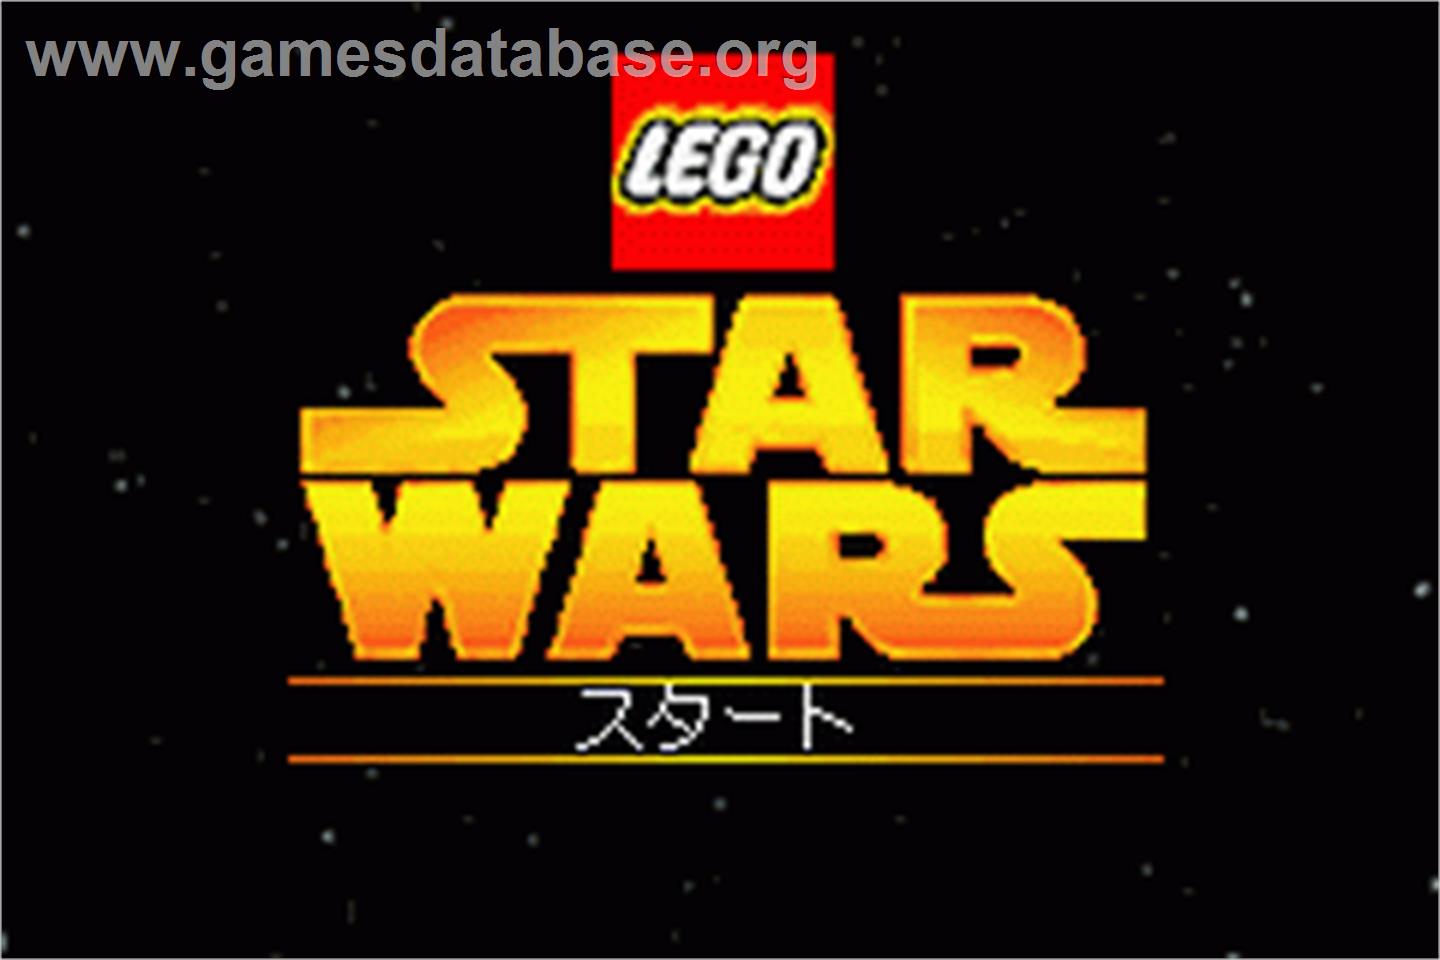 LEGO Star Wars: The Video Game - Nintendo Game Boy Advance - Artwork - Title Screen